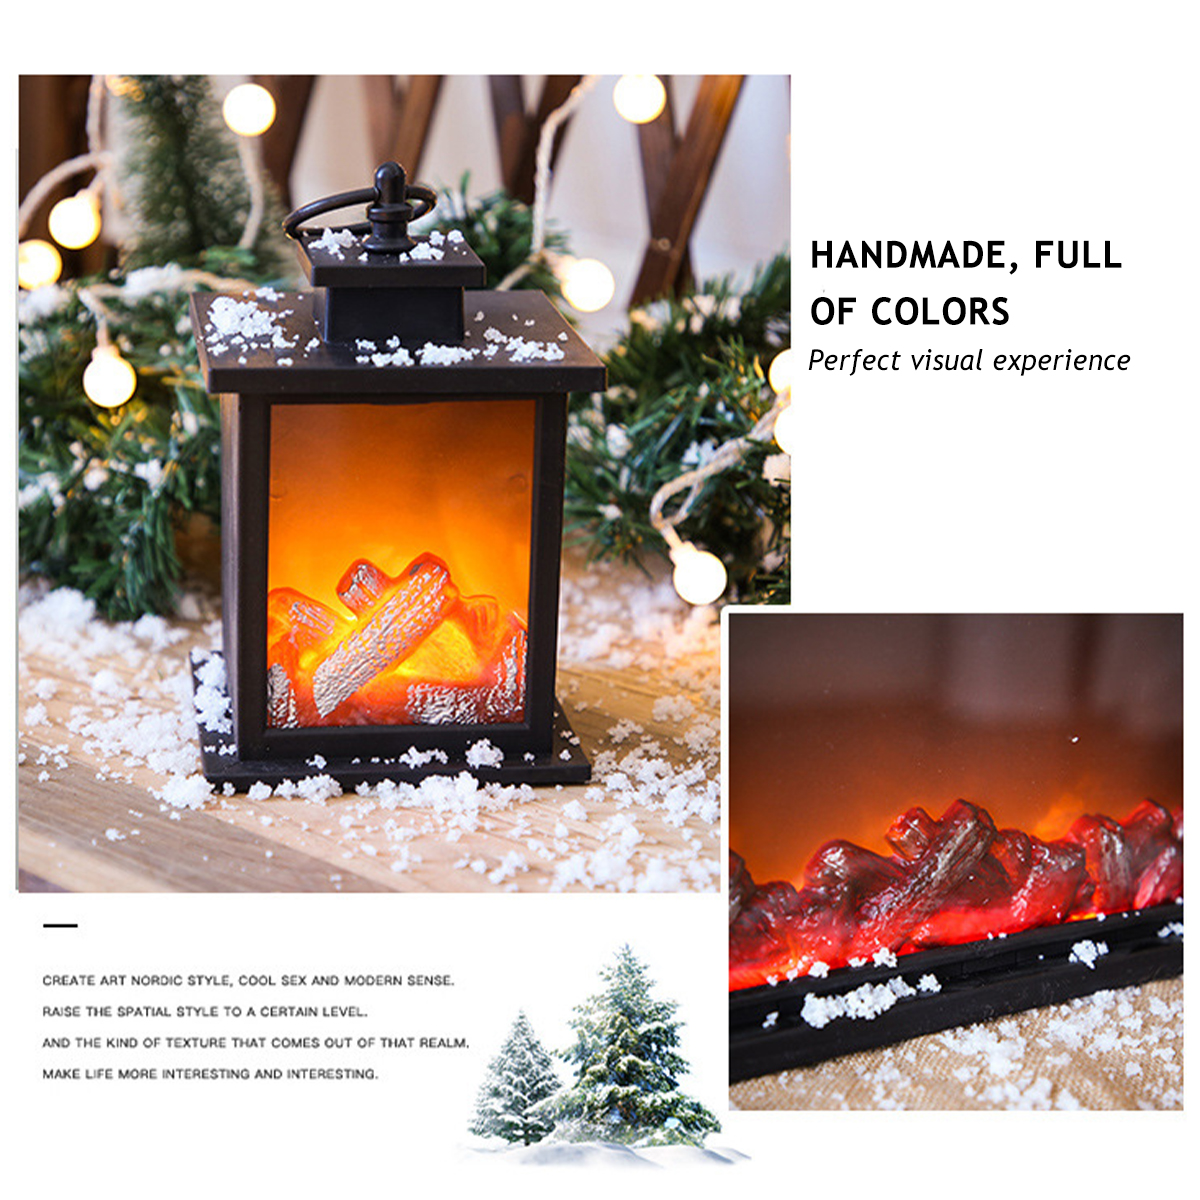 LED-Fireplace-Lantern-Flameless-Light-Fire-Effect-Vintage-Battery-Power-Lamp-HOT-1697164-7